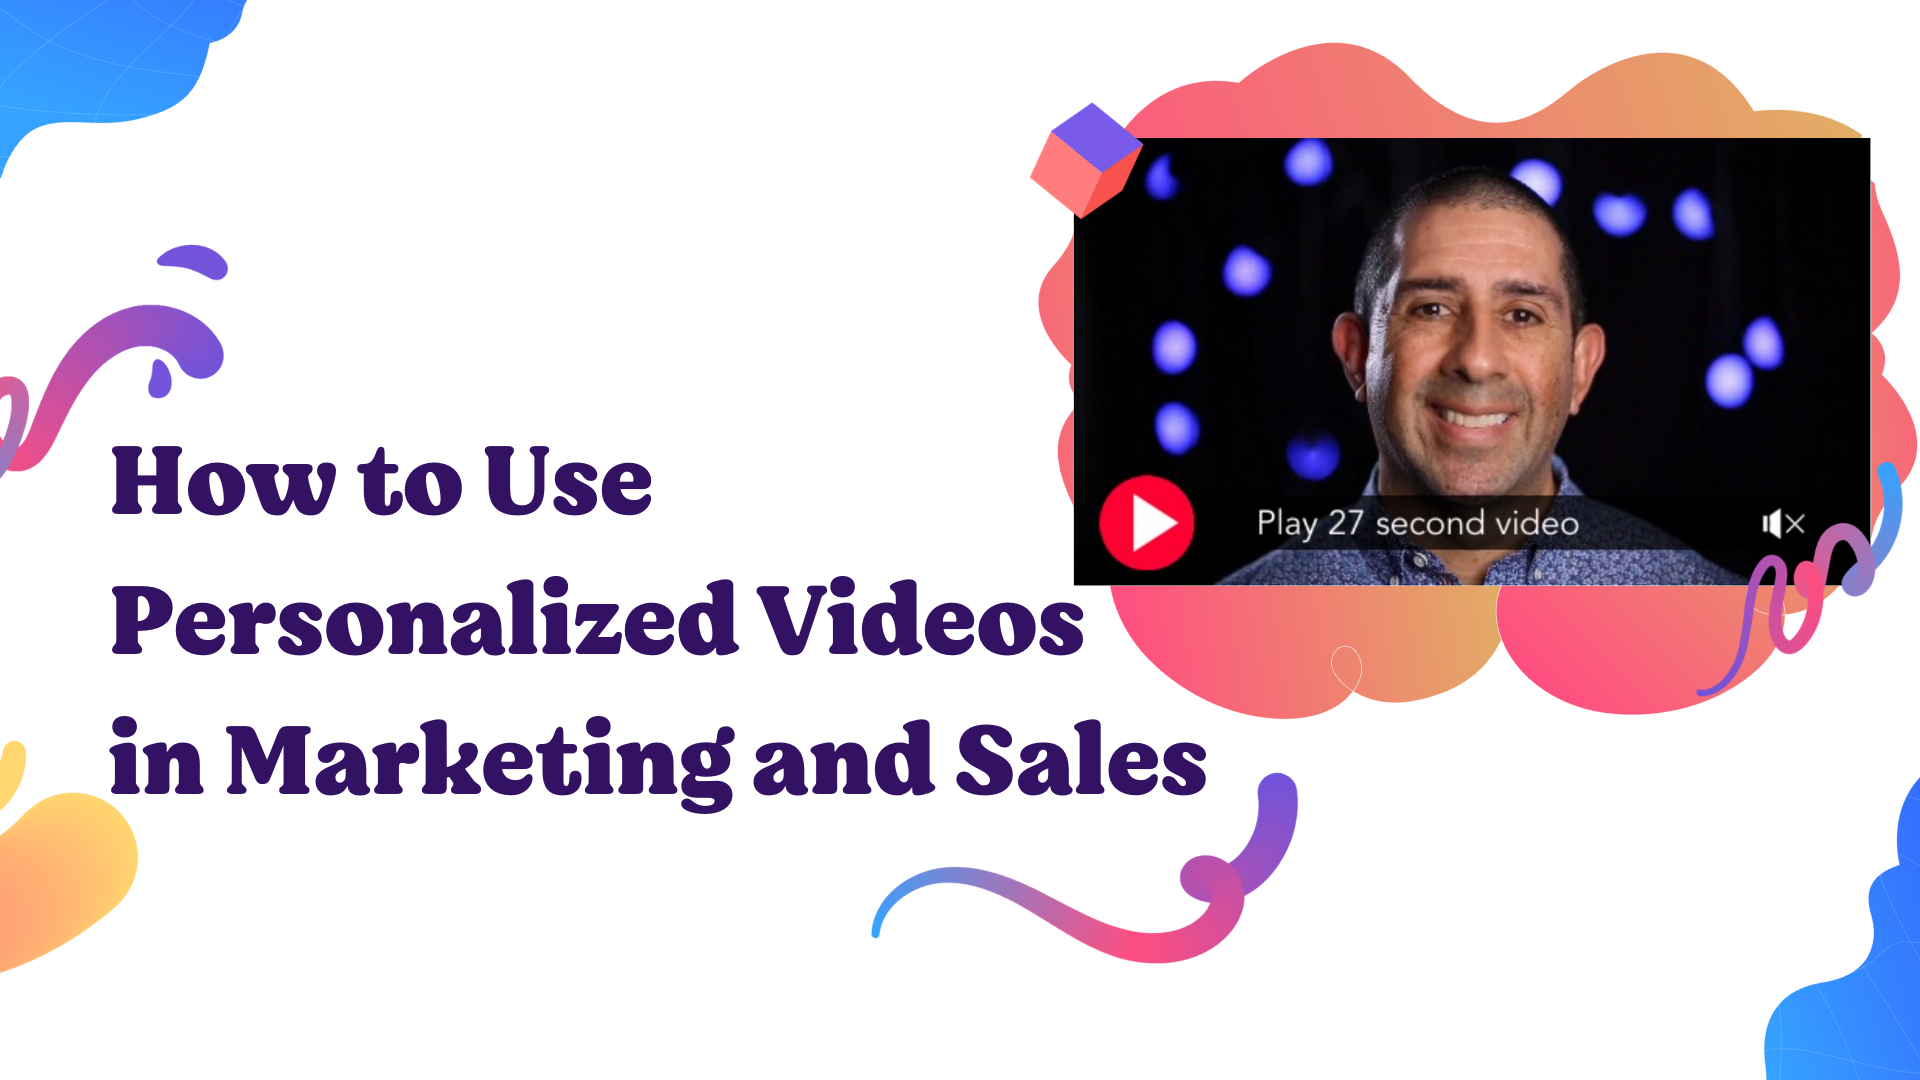 Videos in Marketing